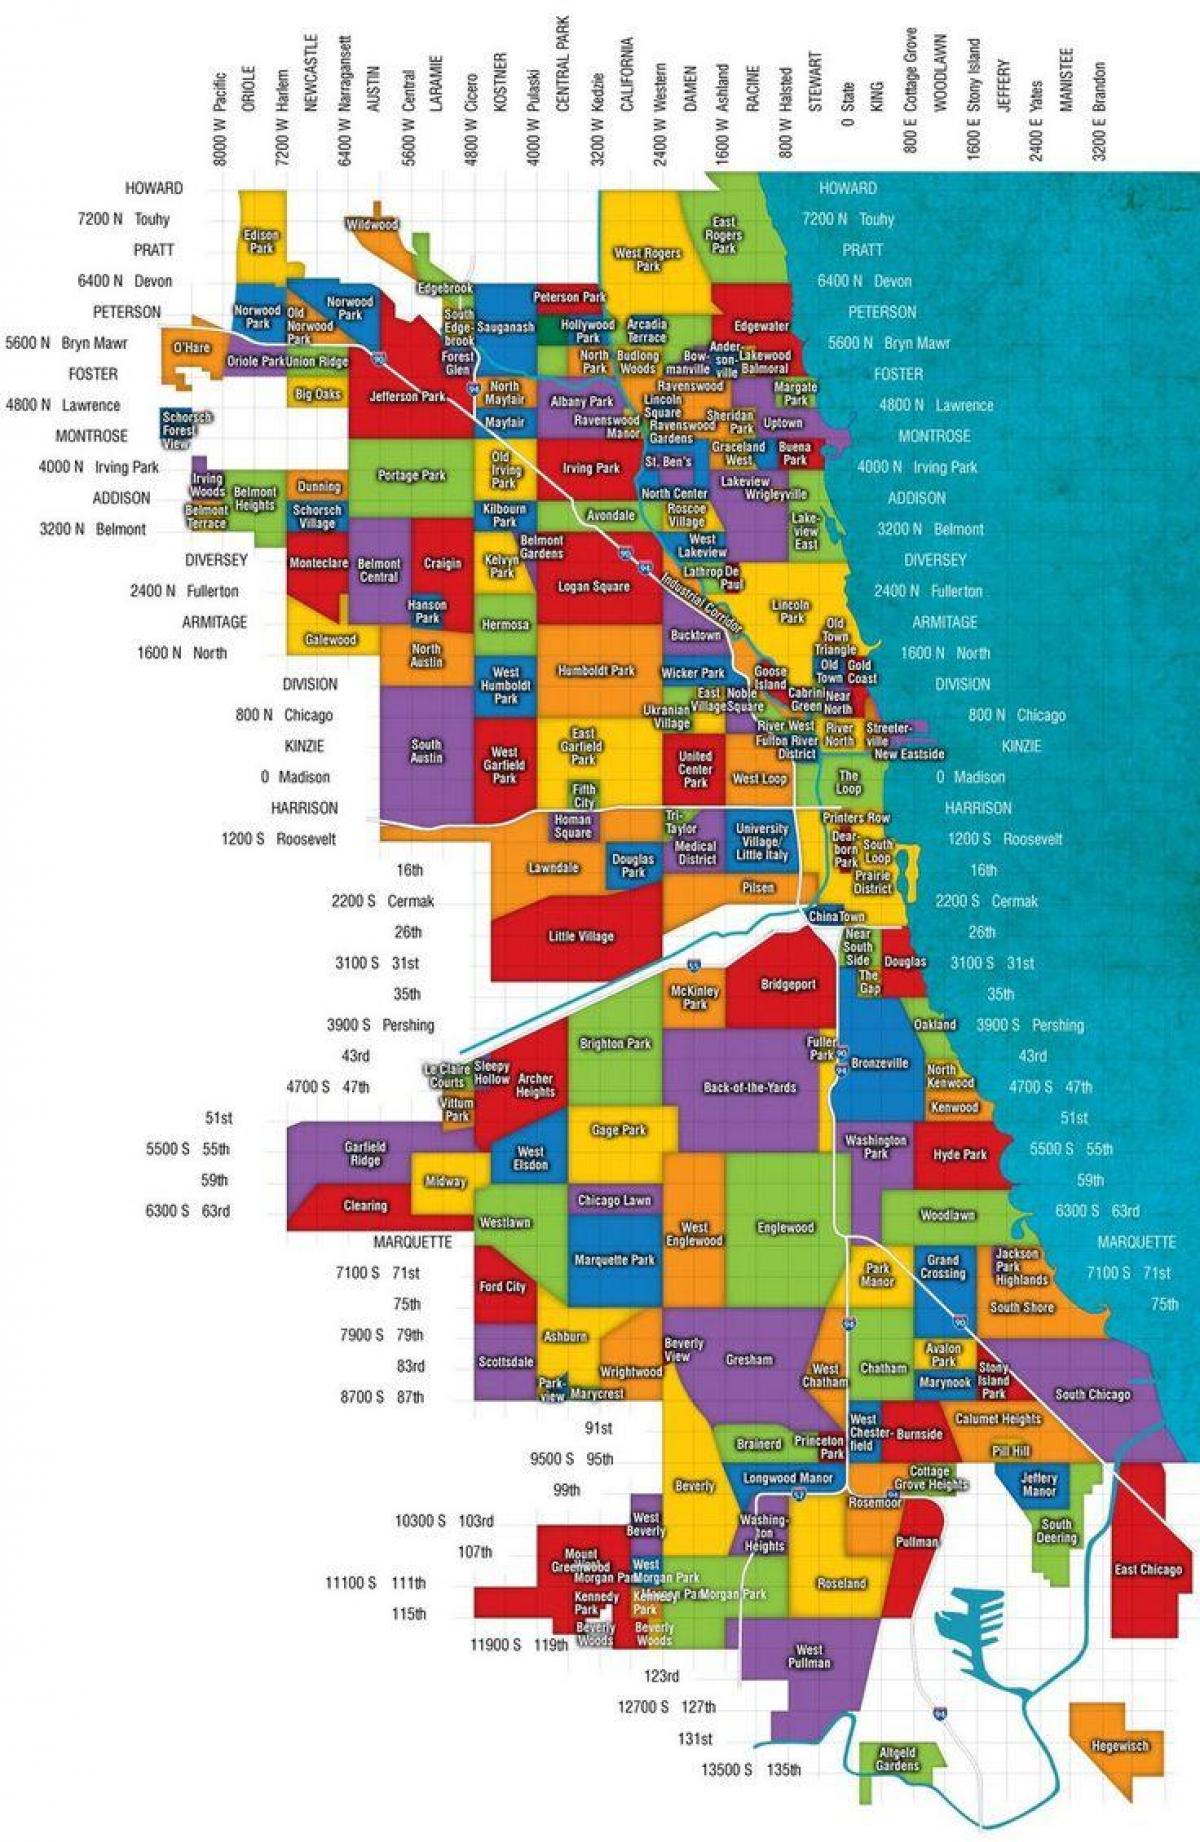 kort af Chicago og úthverfi